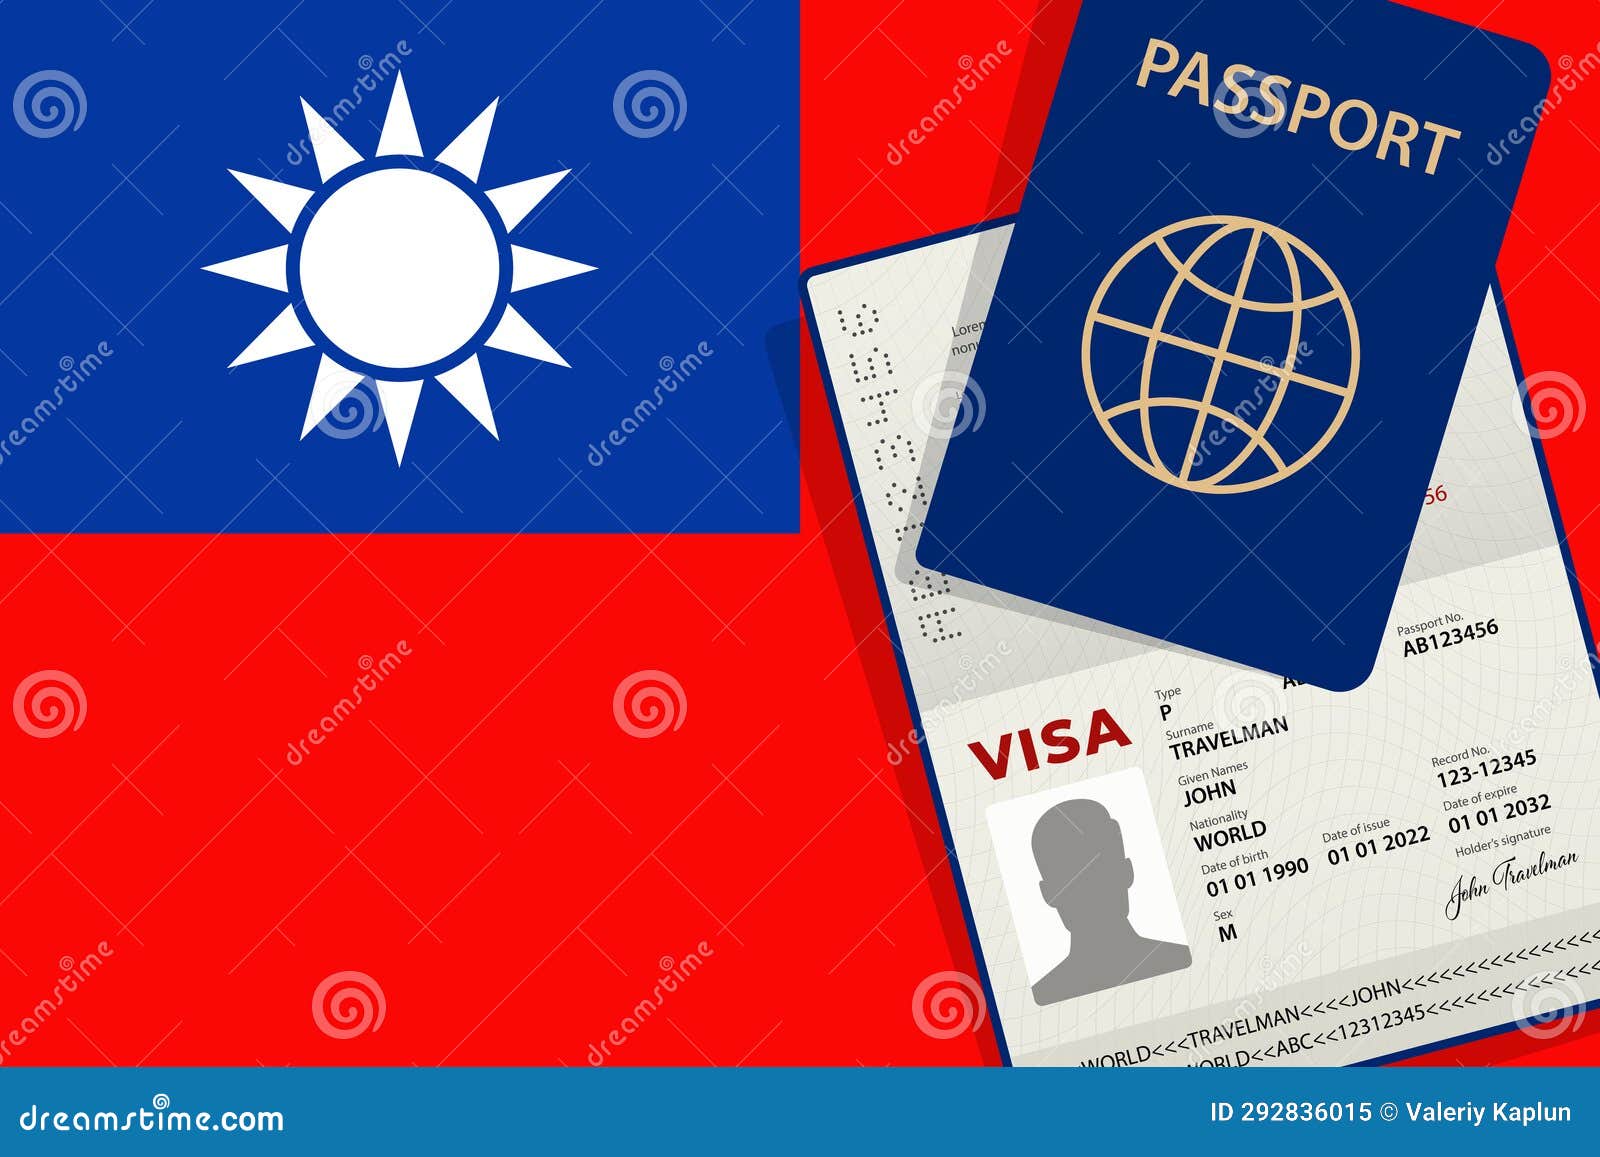 File:台灣護照.jpg - 维基百科，自由的百科全书